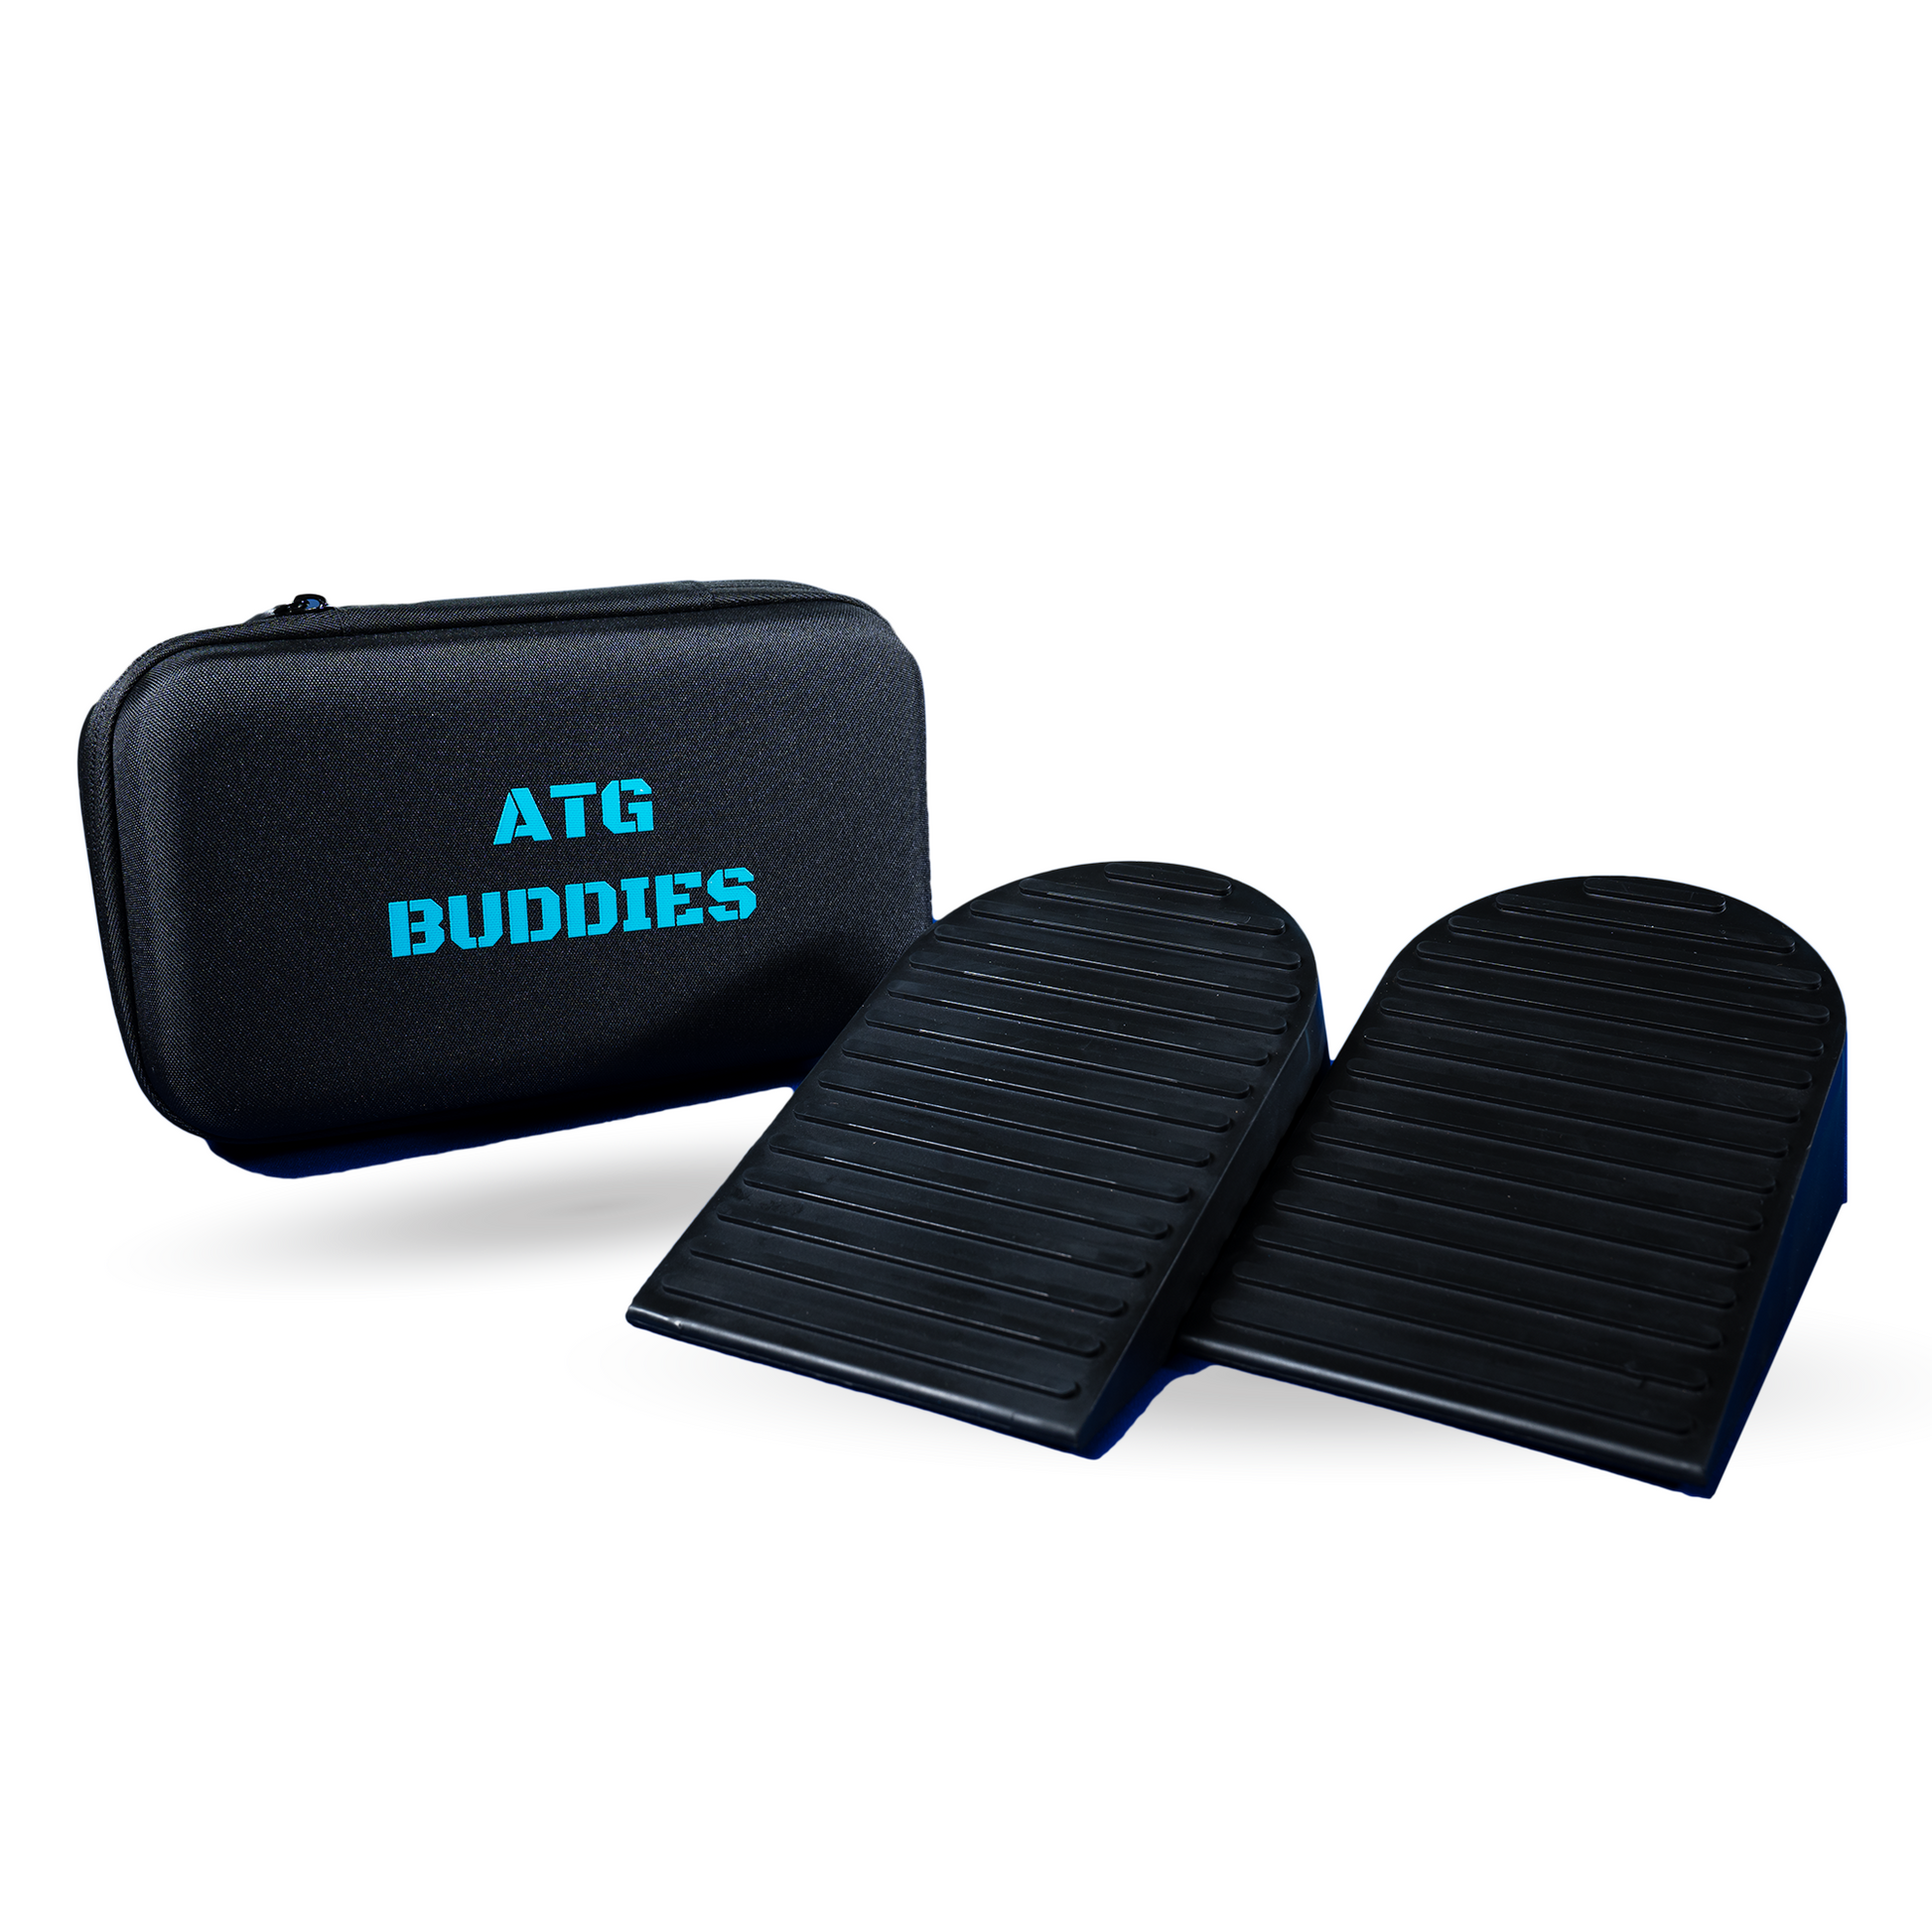 ATG Buddies | ATG Equipment